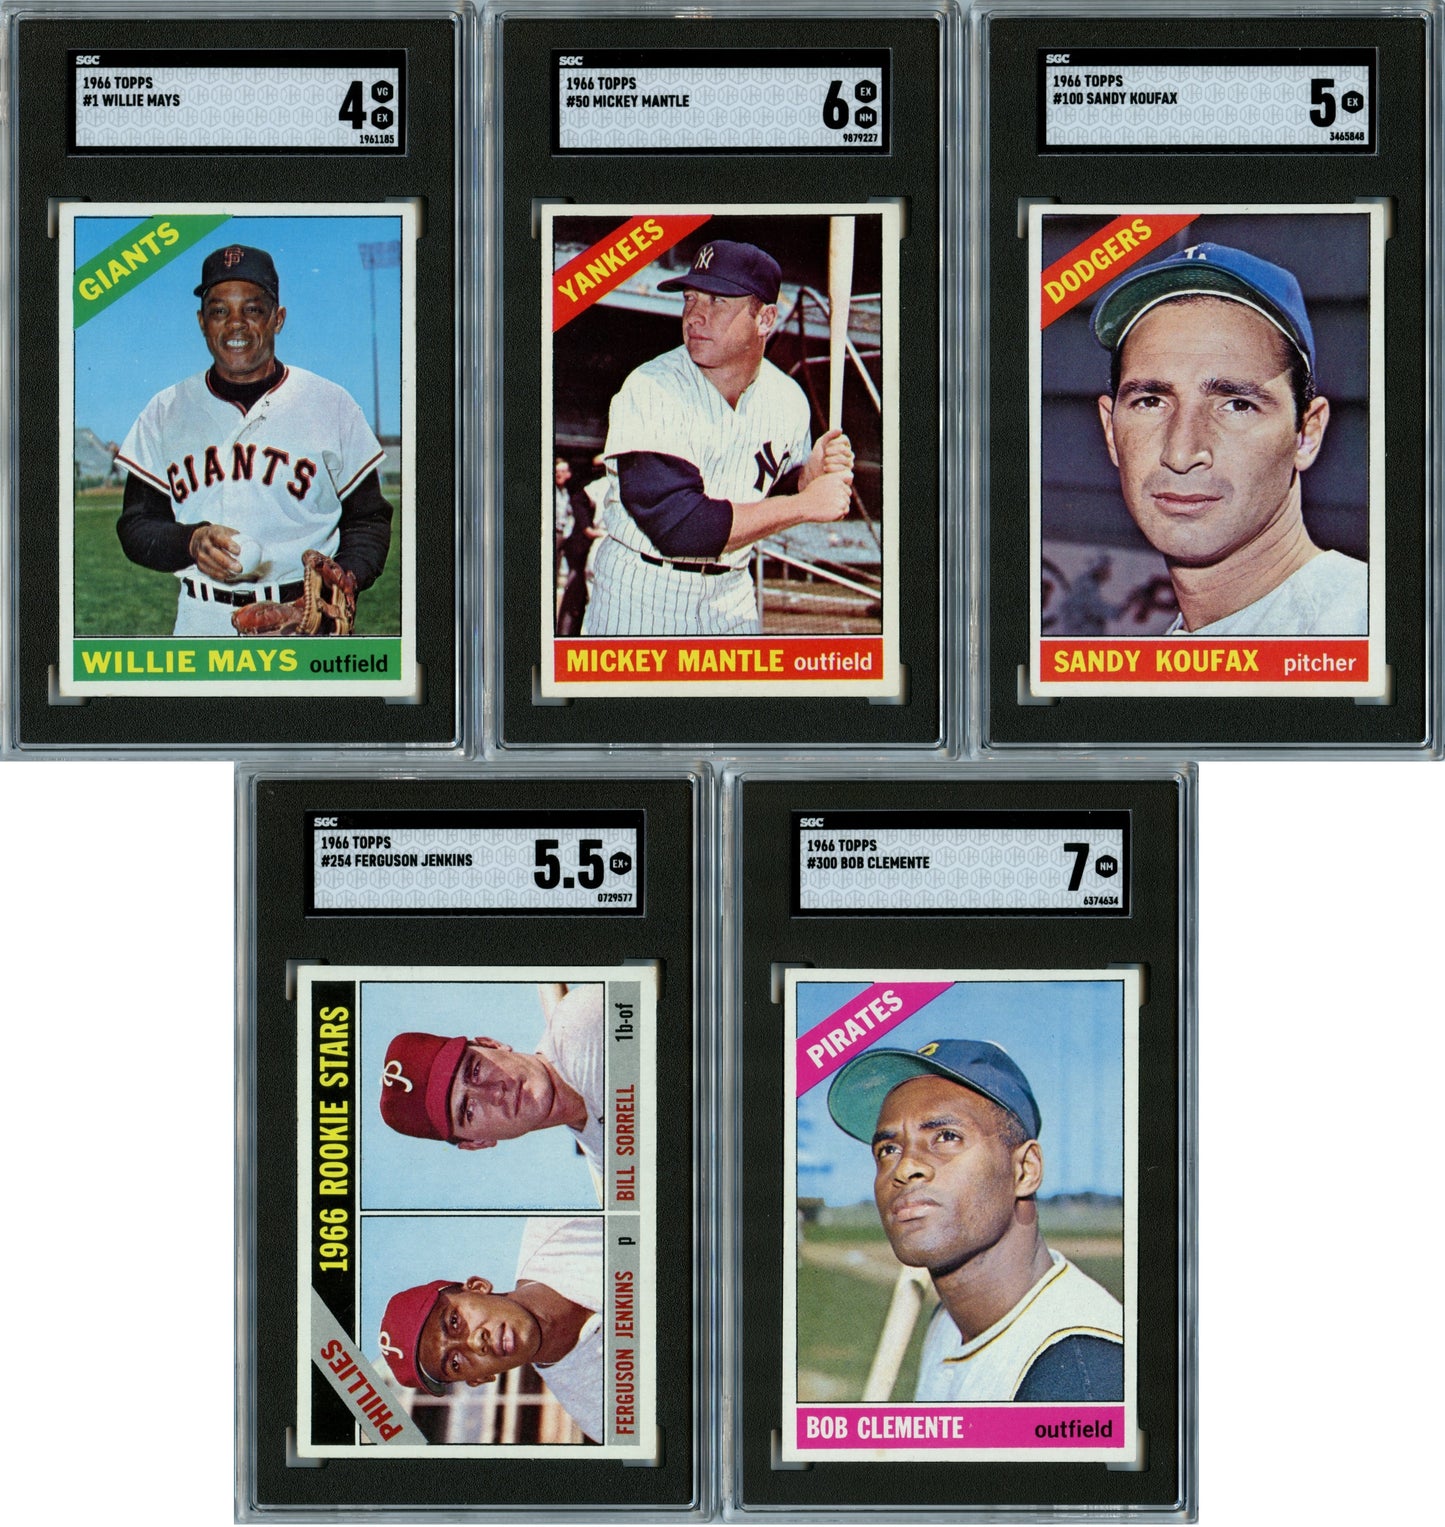 1966 Topps Baseball Set Break with Variations 602 Spot Random Card (Mickey Mantle SGC 6, Roberto Clemente SGC 7, Fergie Jenkins Rookie SGC 5.5, Sandy Koufax SGC 5, etc!)